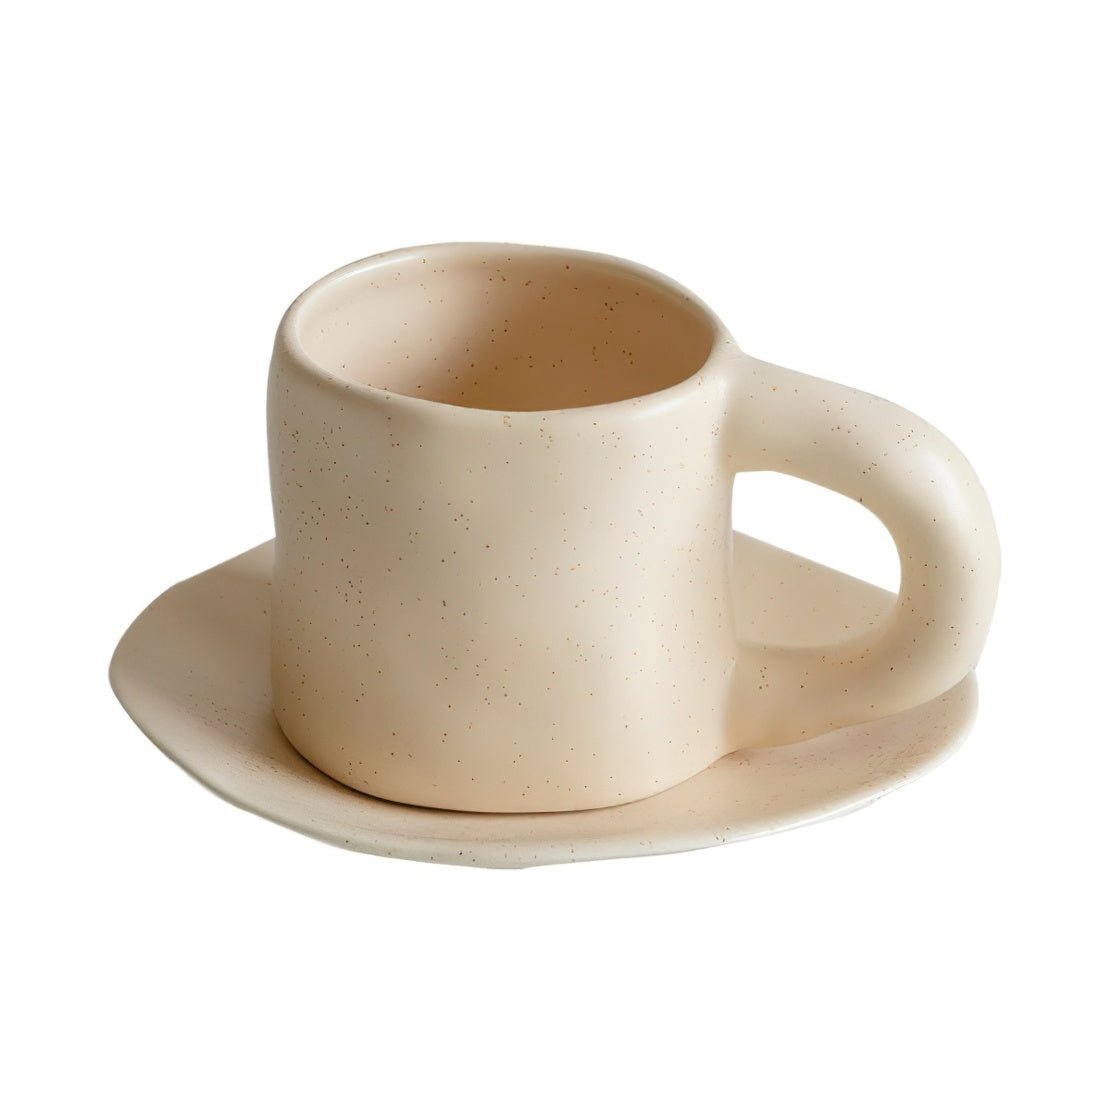 Beige, ceramic pottery mug with saucer